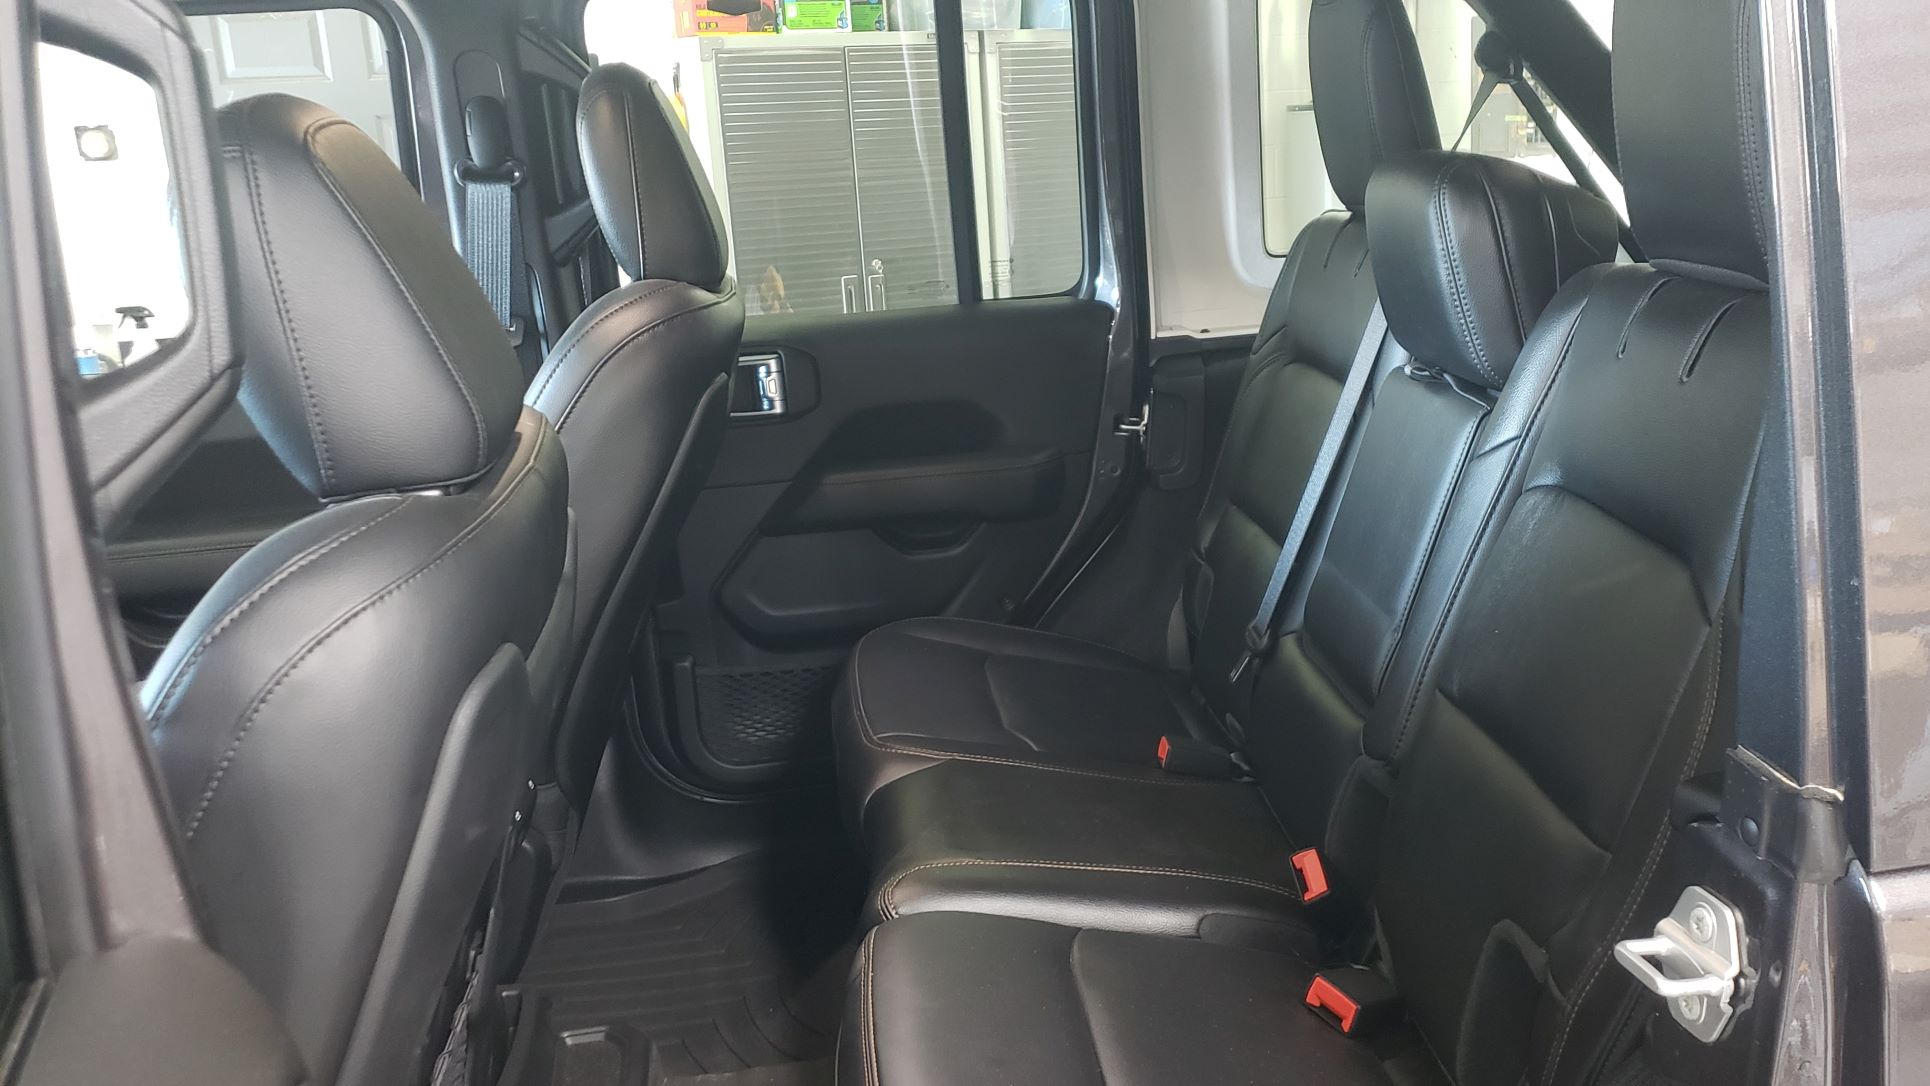 2021-Wrangler-392-edition-back-seat